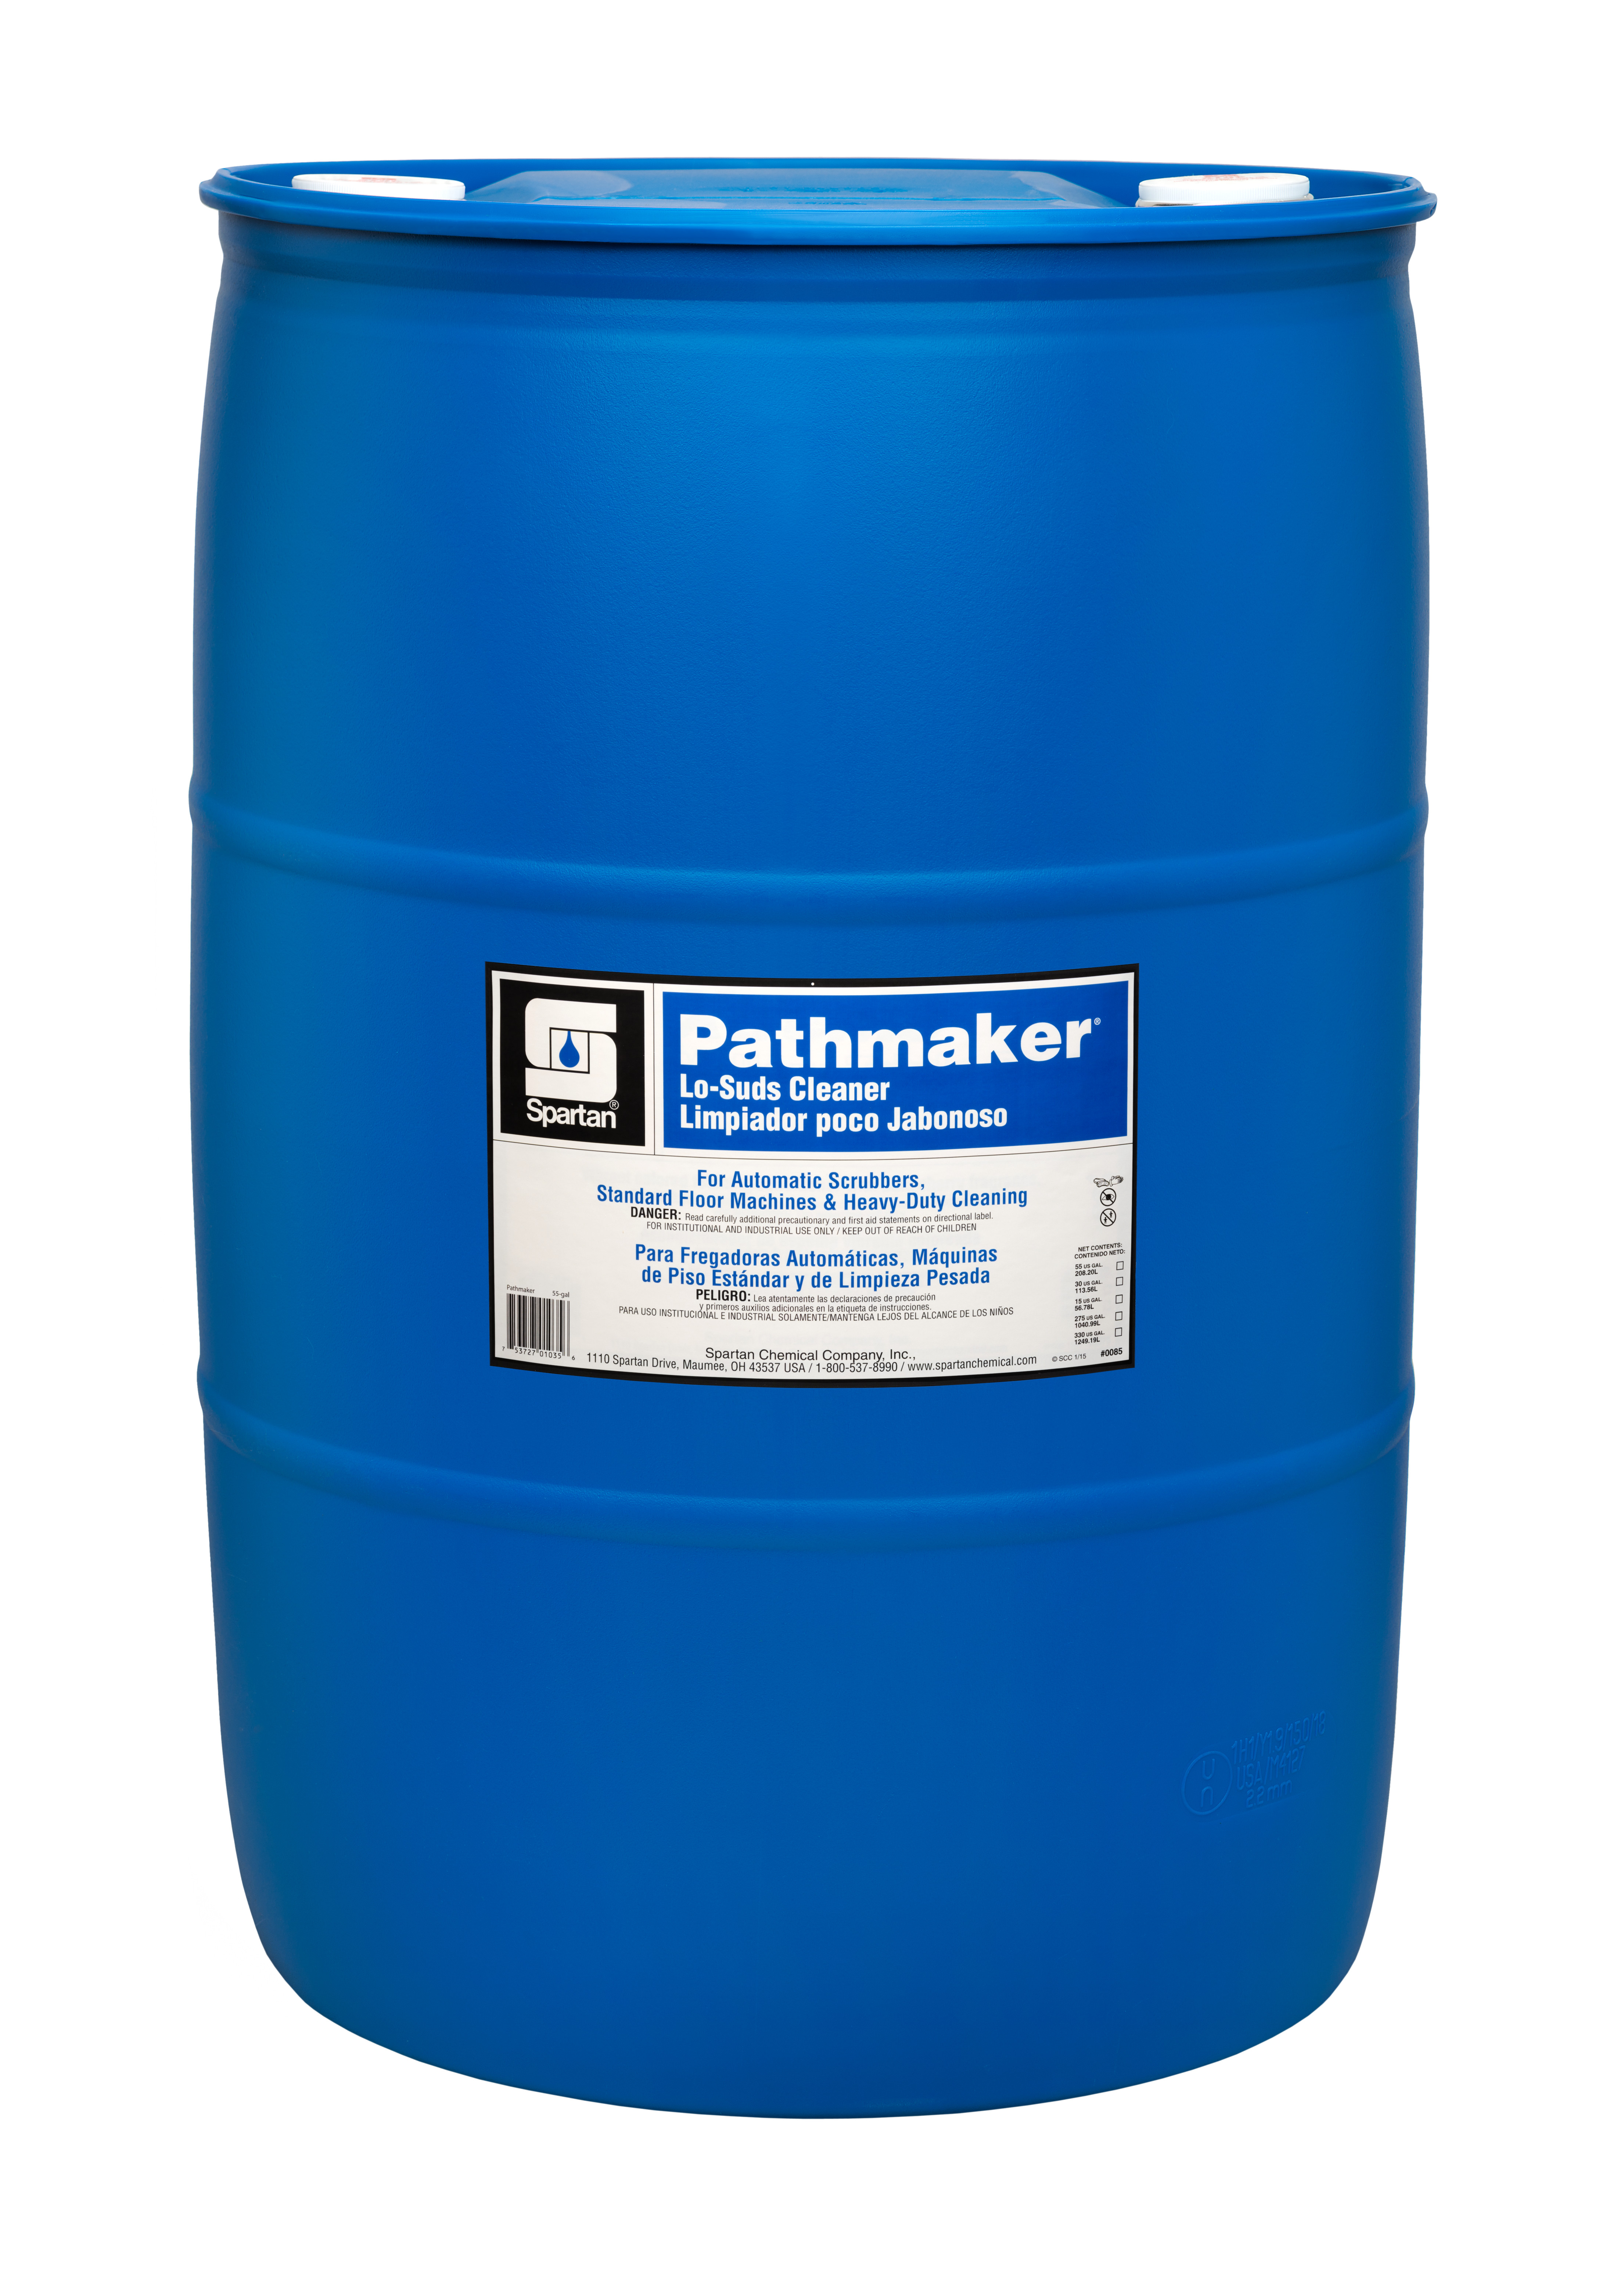 Spartan Chemical Company Pathmaker, 55 GAL DRUM